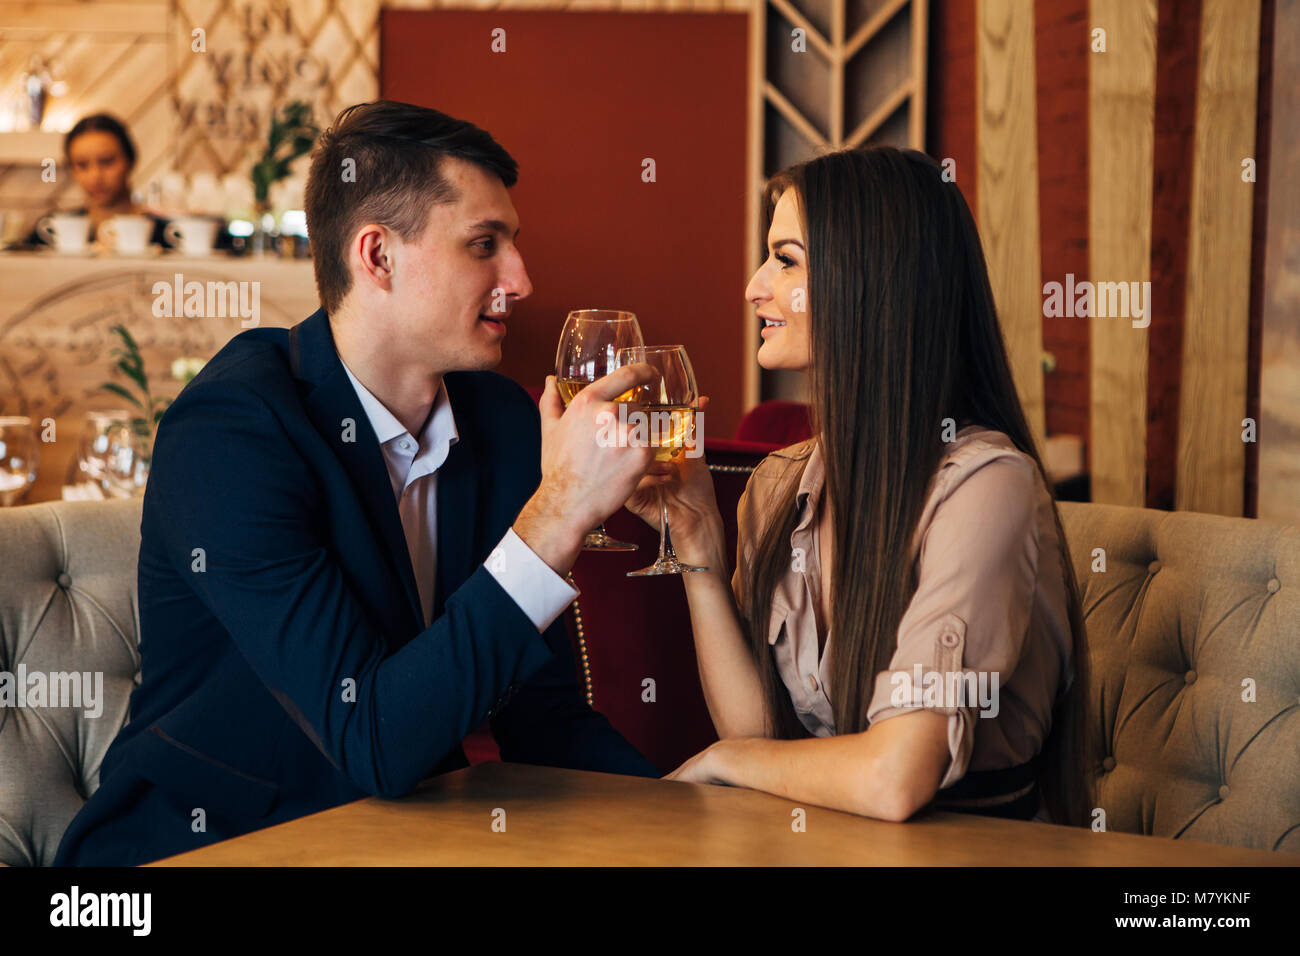 Concept de rencontres, couple drinking wine in a restaurant Banque D'Images